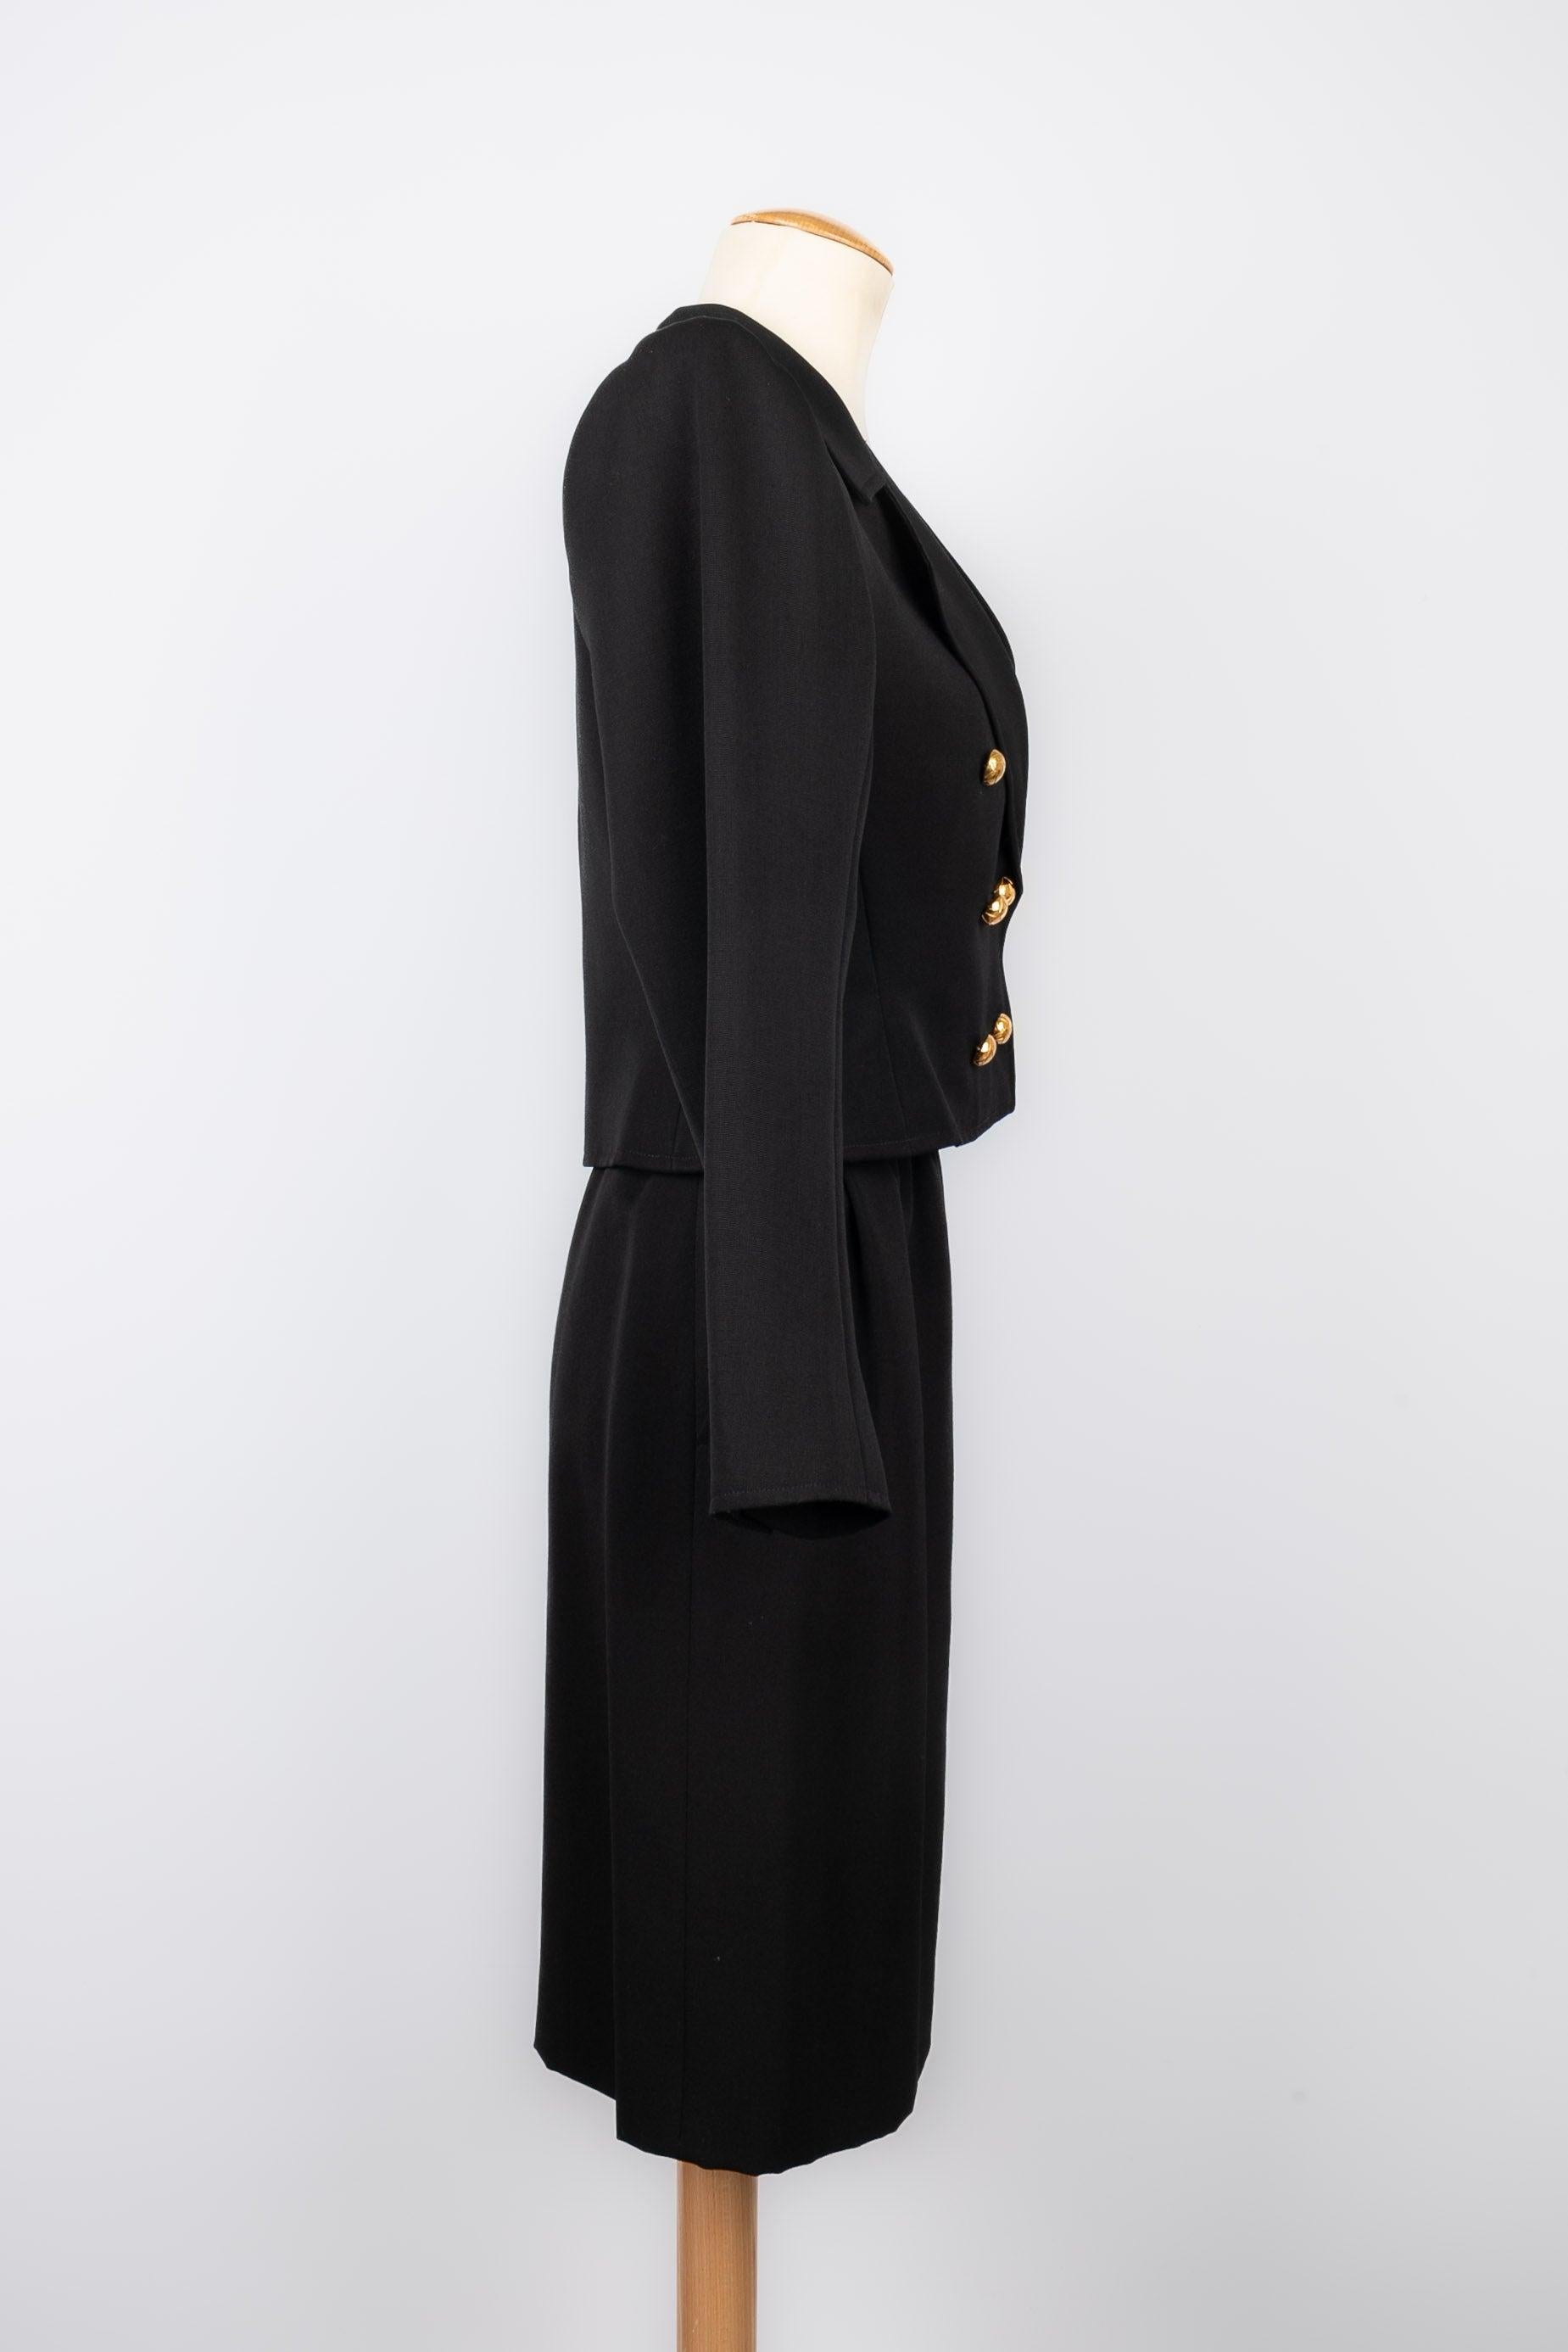 Women's Yves Saint Laurent Black Skirt Suit Enlivened with Satin Belt Haute Couture